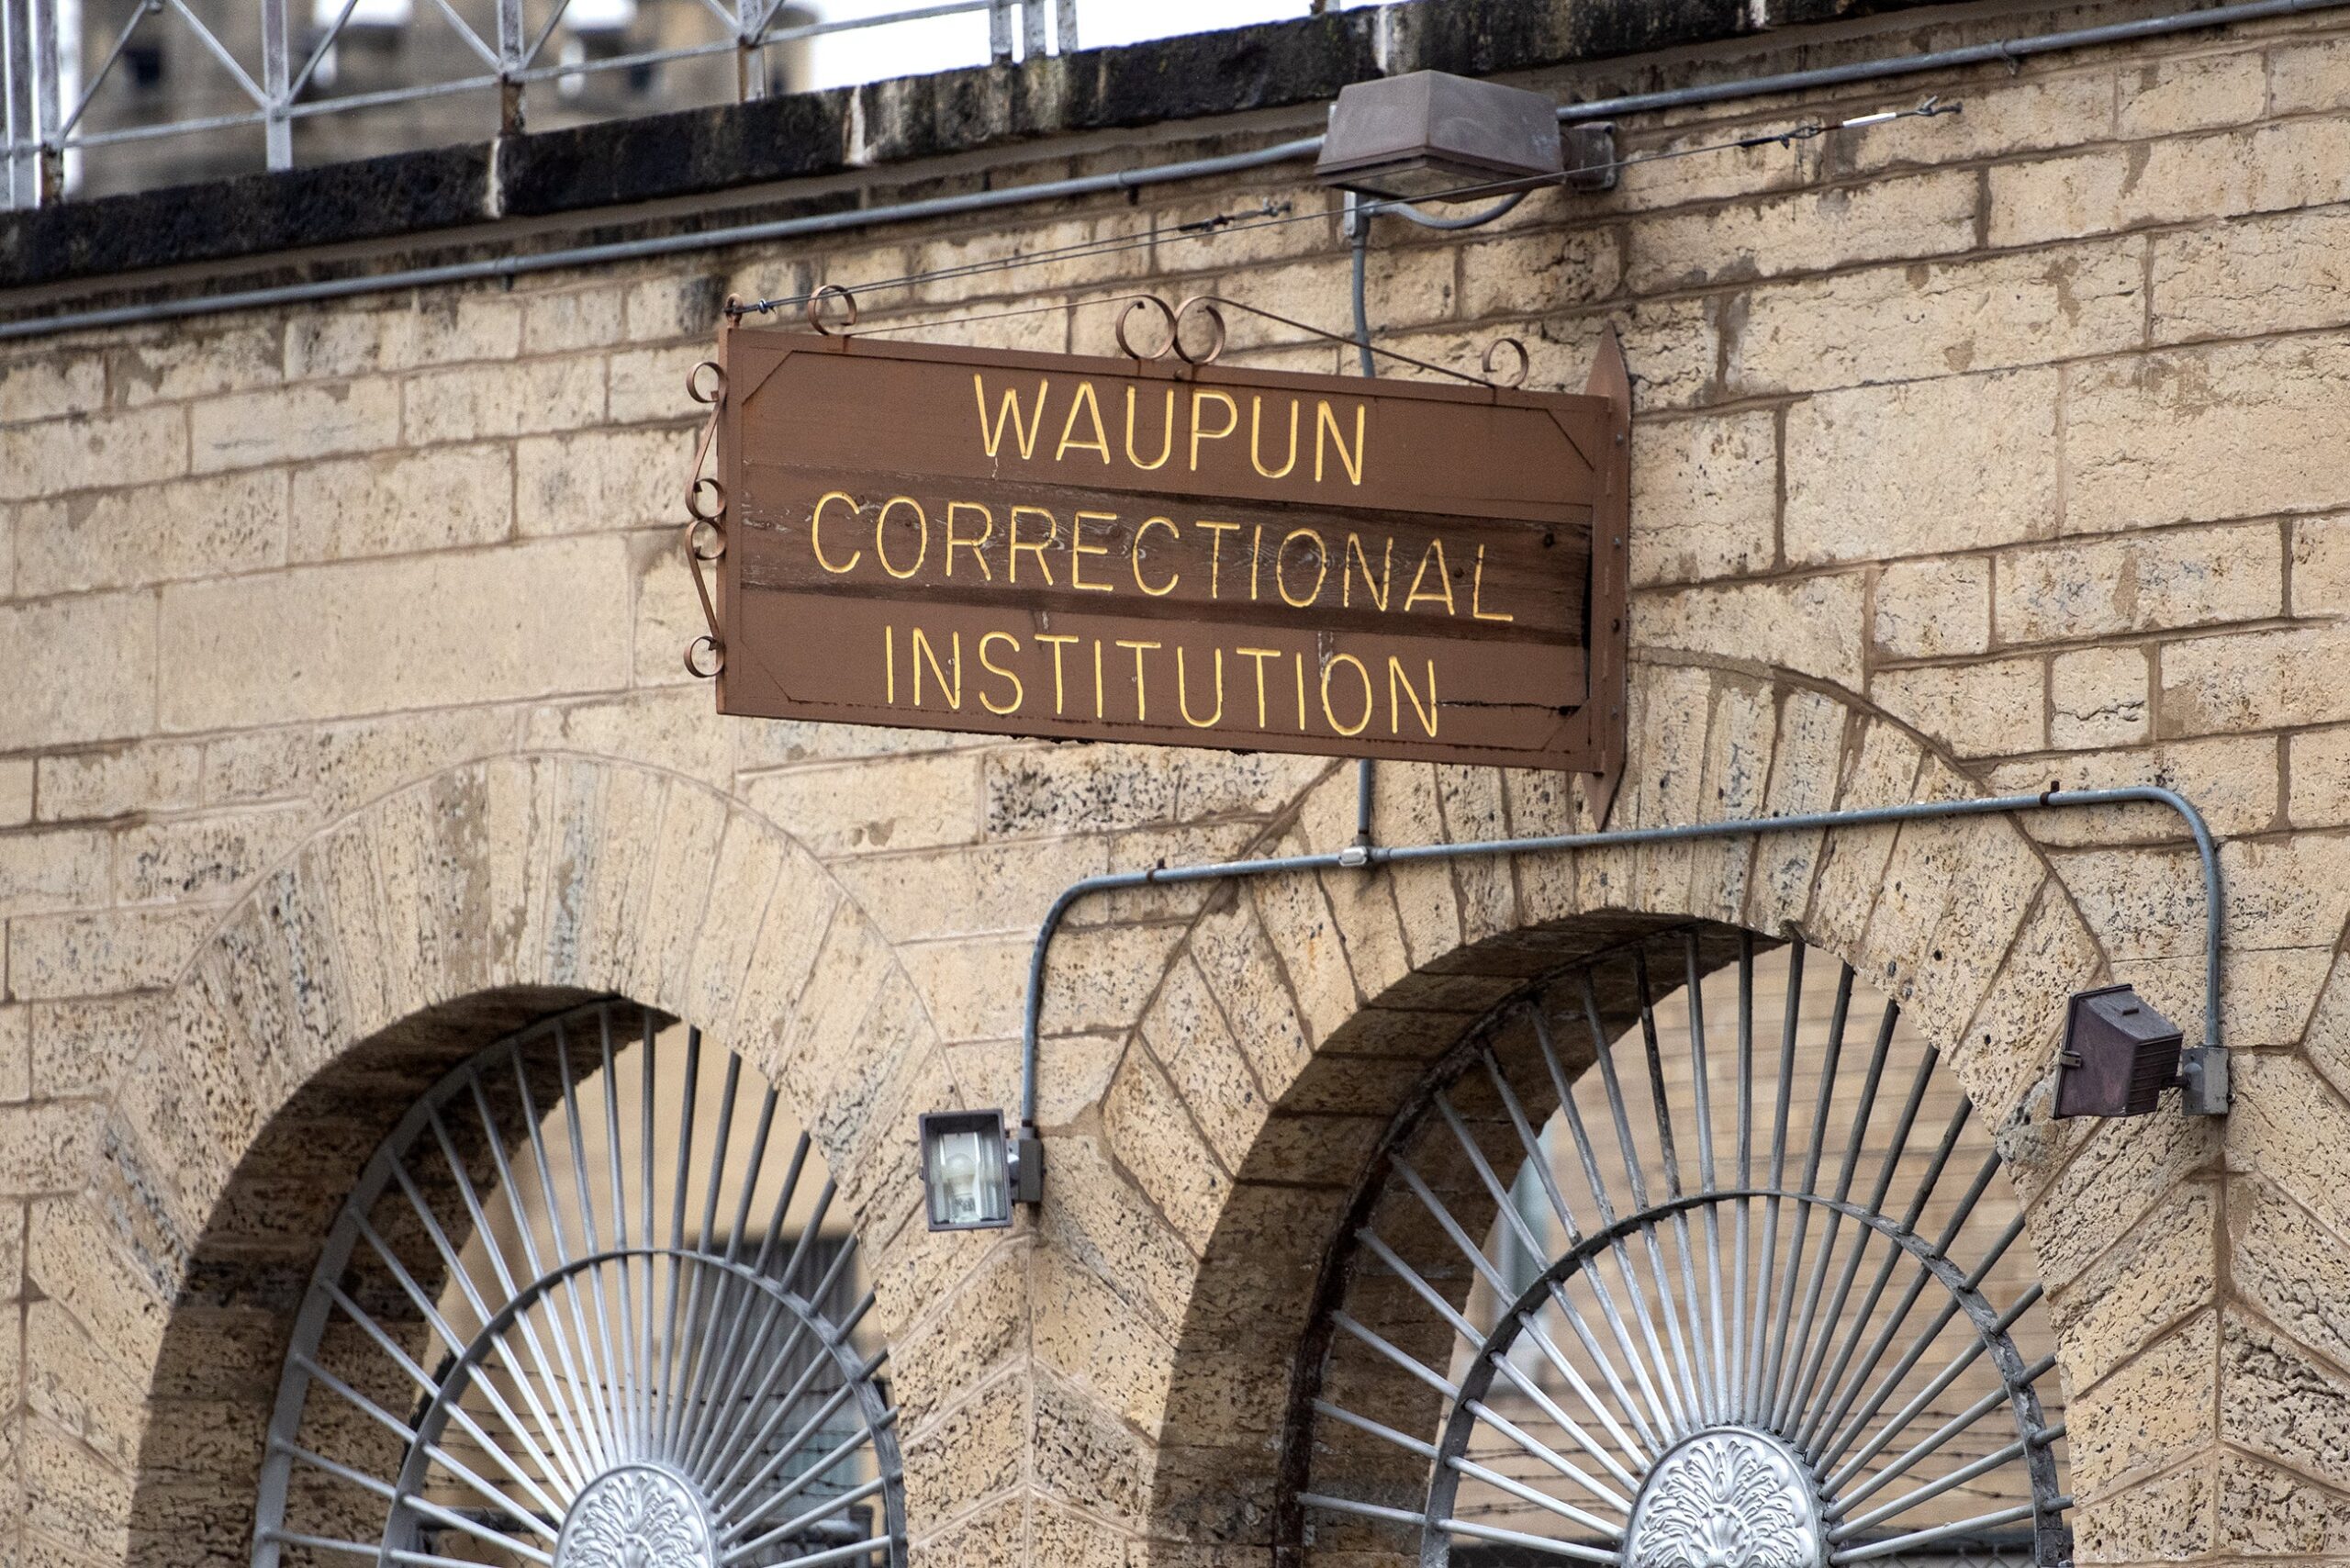 Waupun Correctional Institution